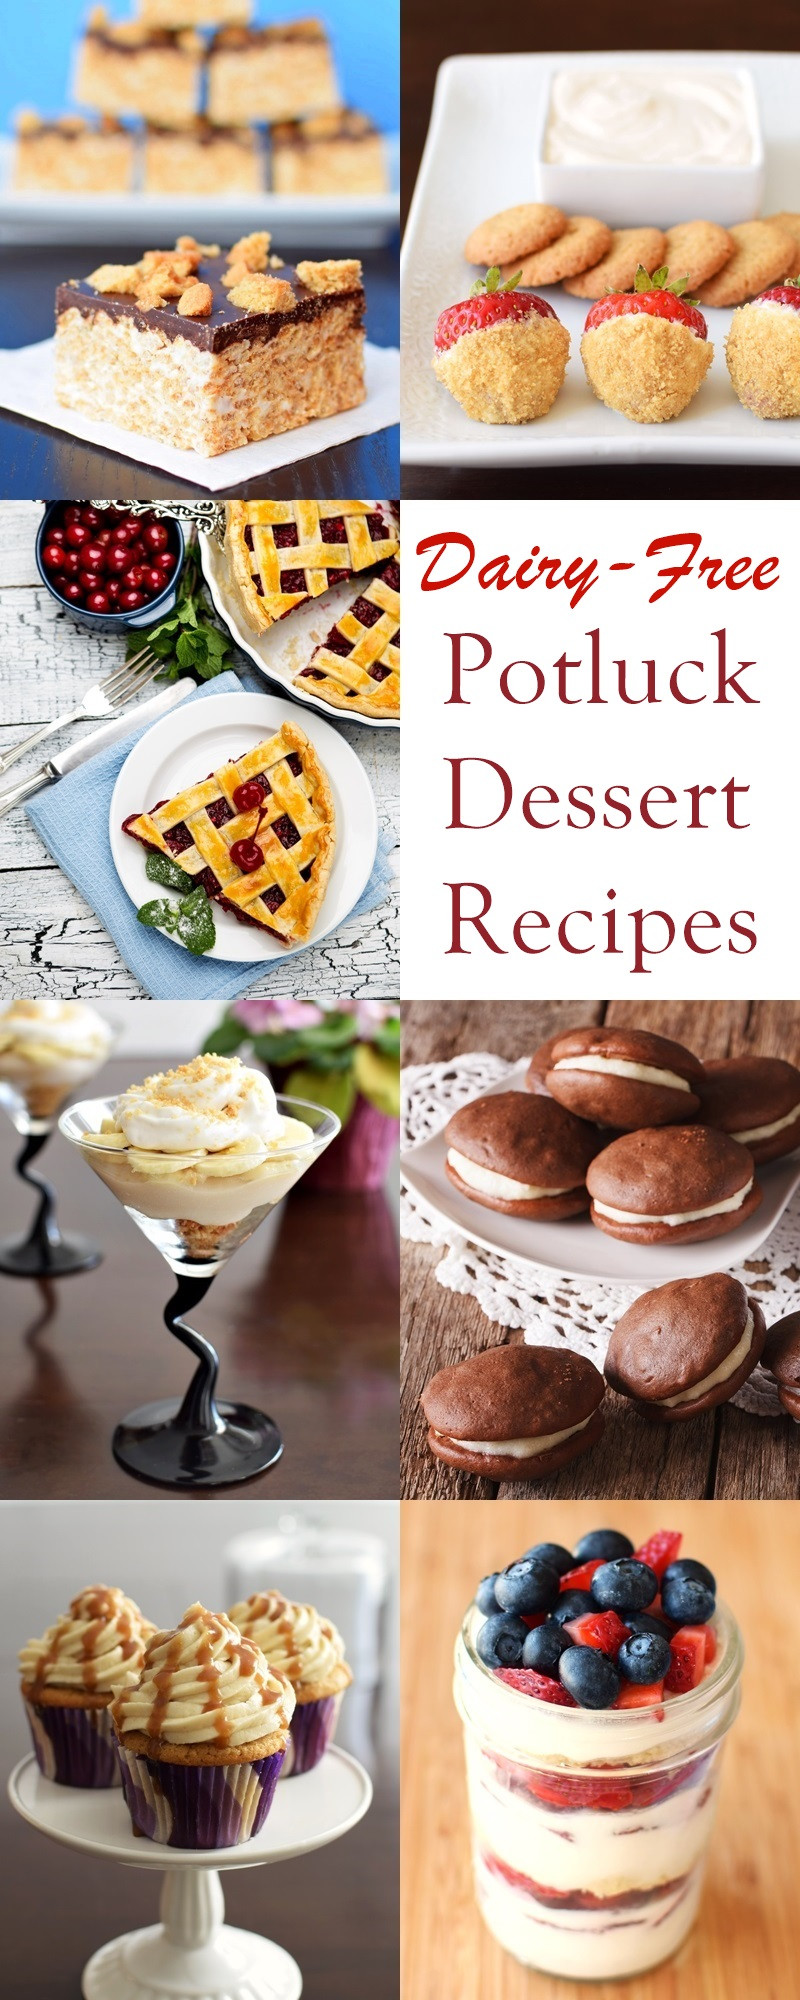 Potluck Dessert Ideas
 22 Dairy Free Potluck Dessert Recipes Everyone Will Love